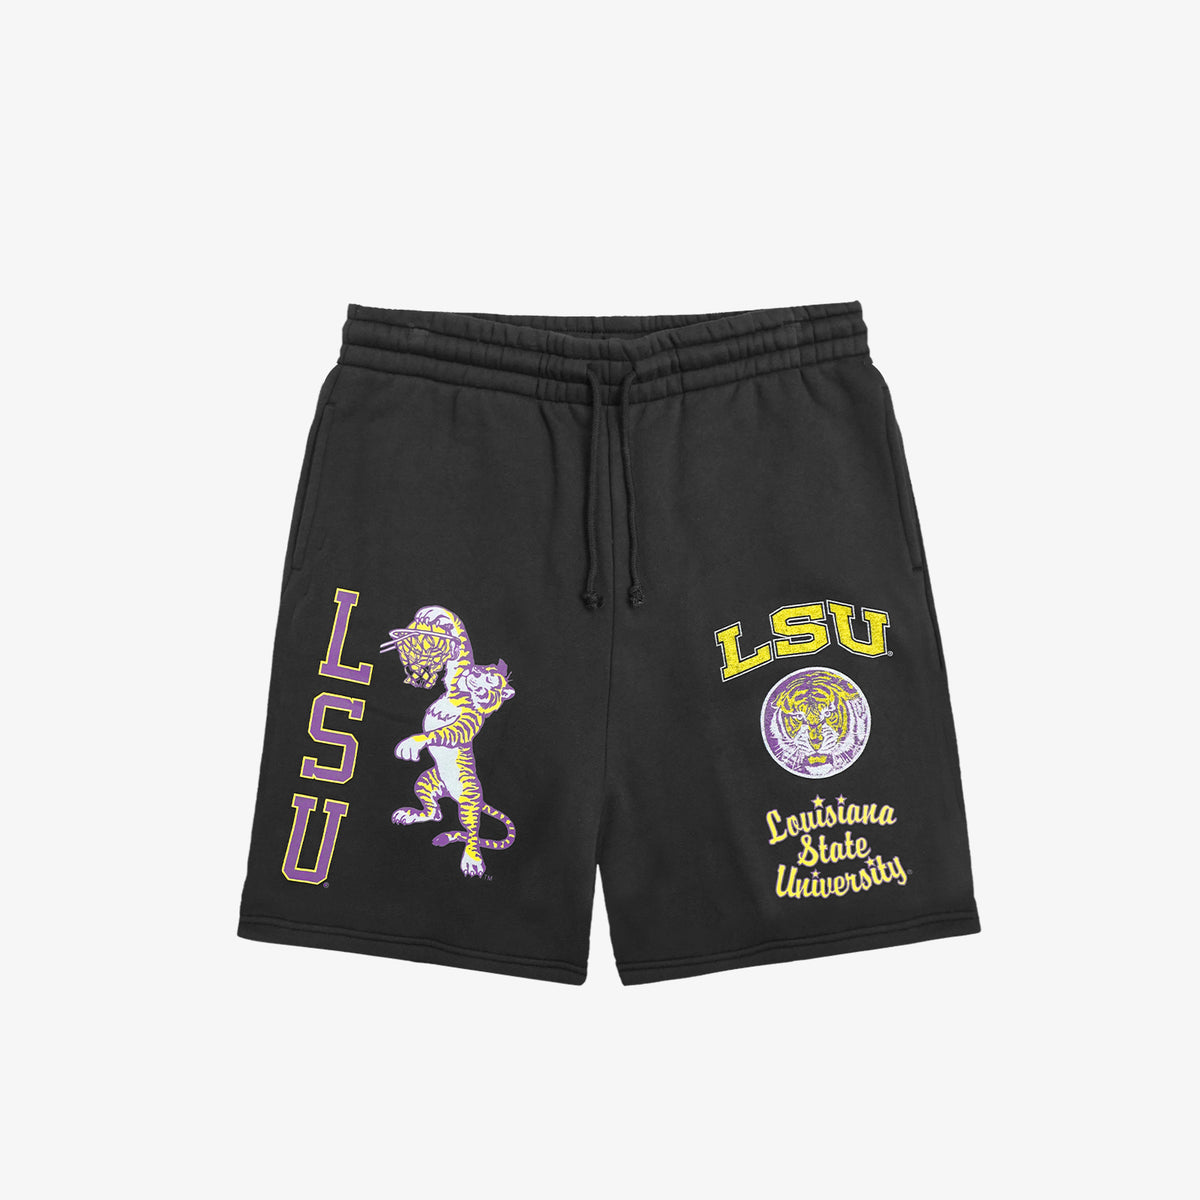 Louisiana State University Vault Shorts - Black